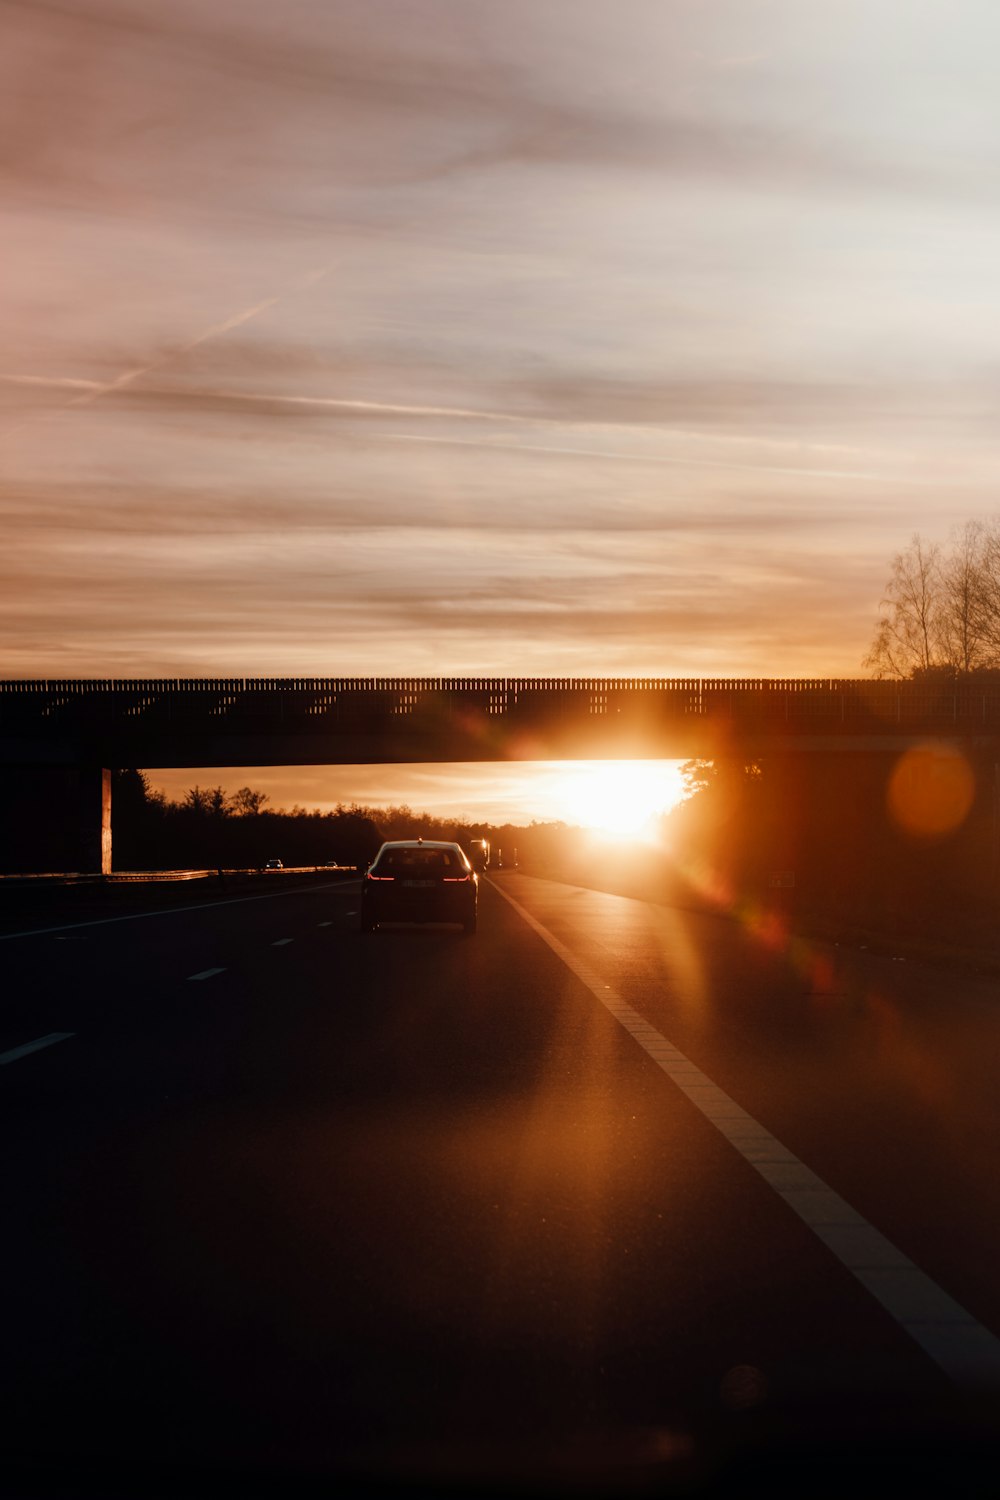 black car on road during sunset